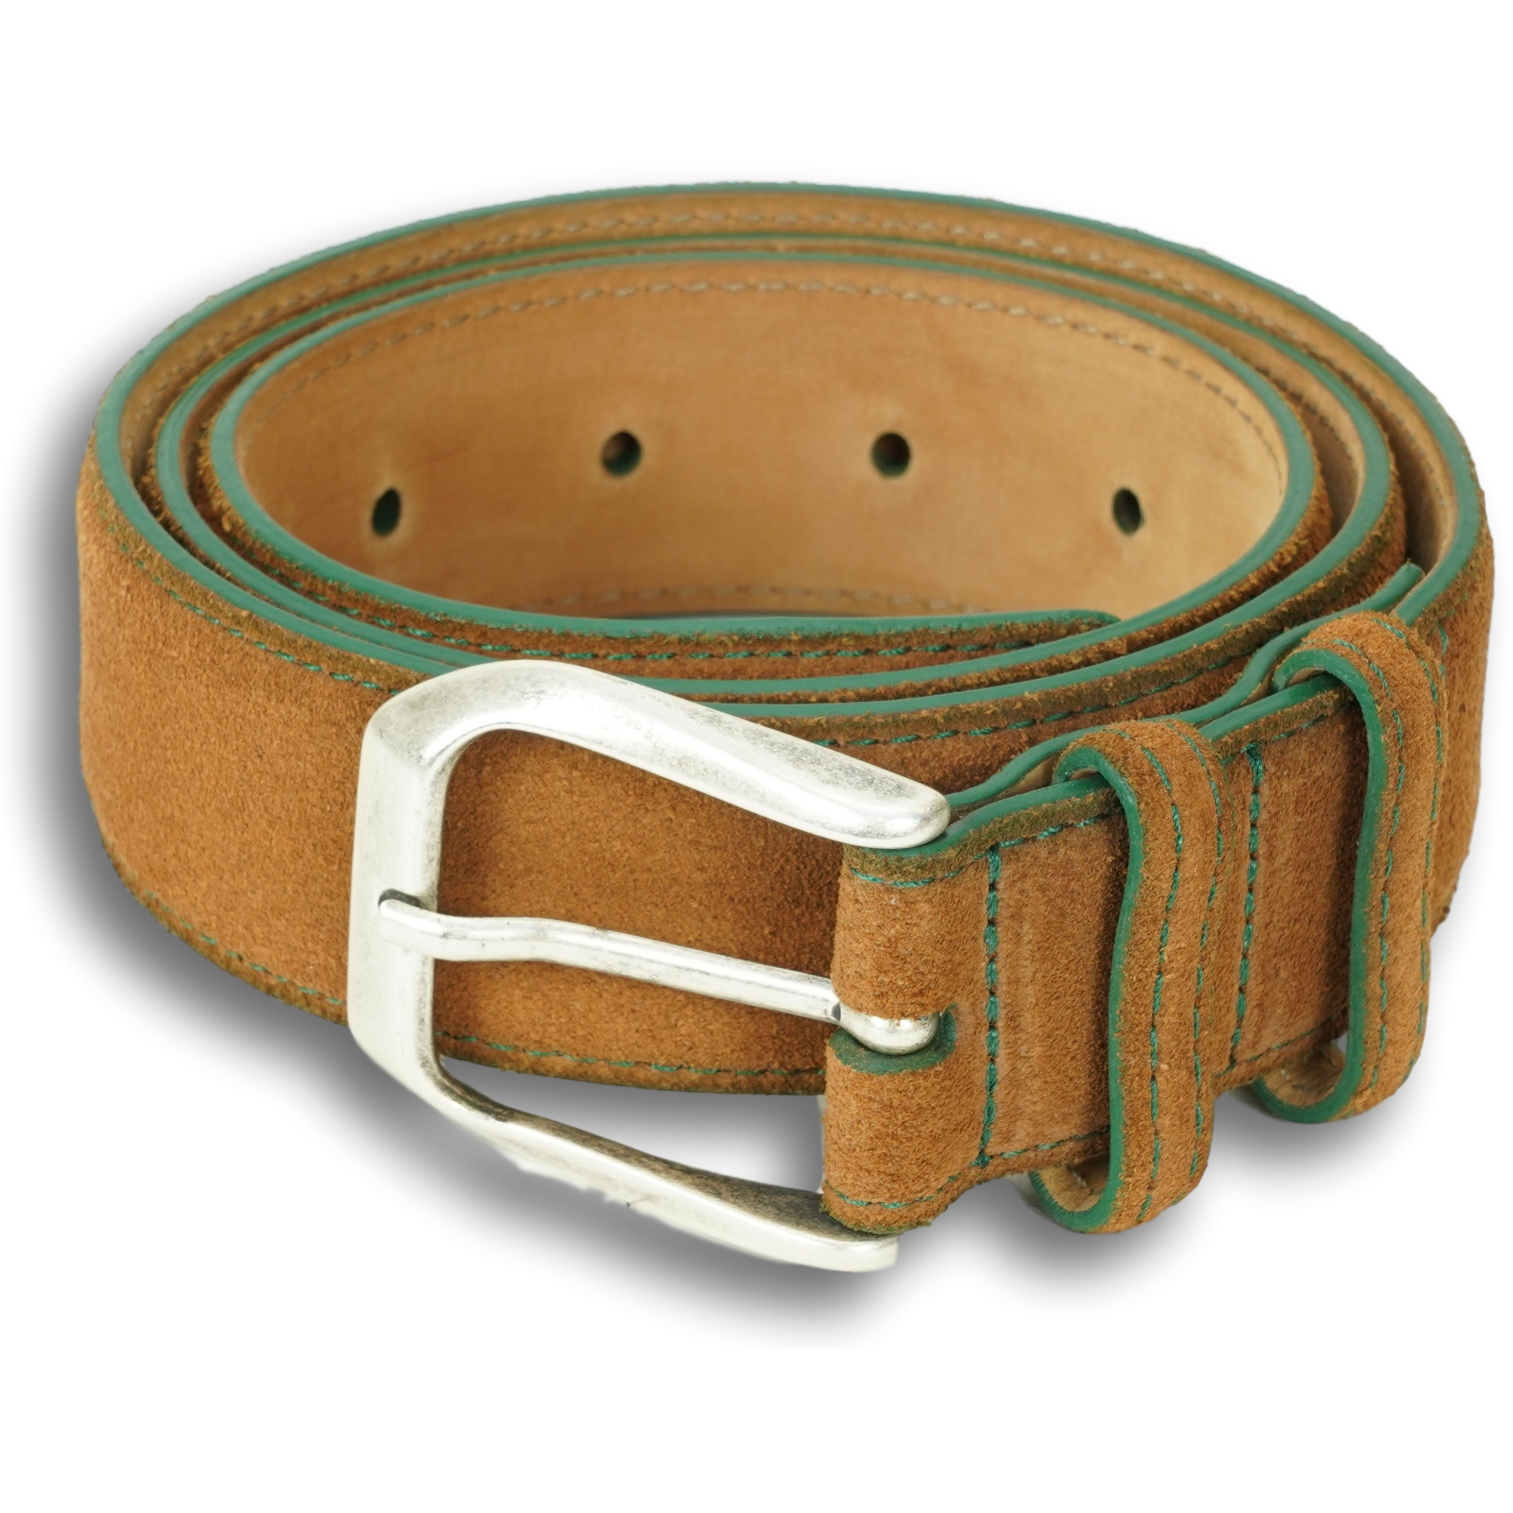 Suede Calfskin Belt with Brushed Nickel Buckle